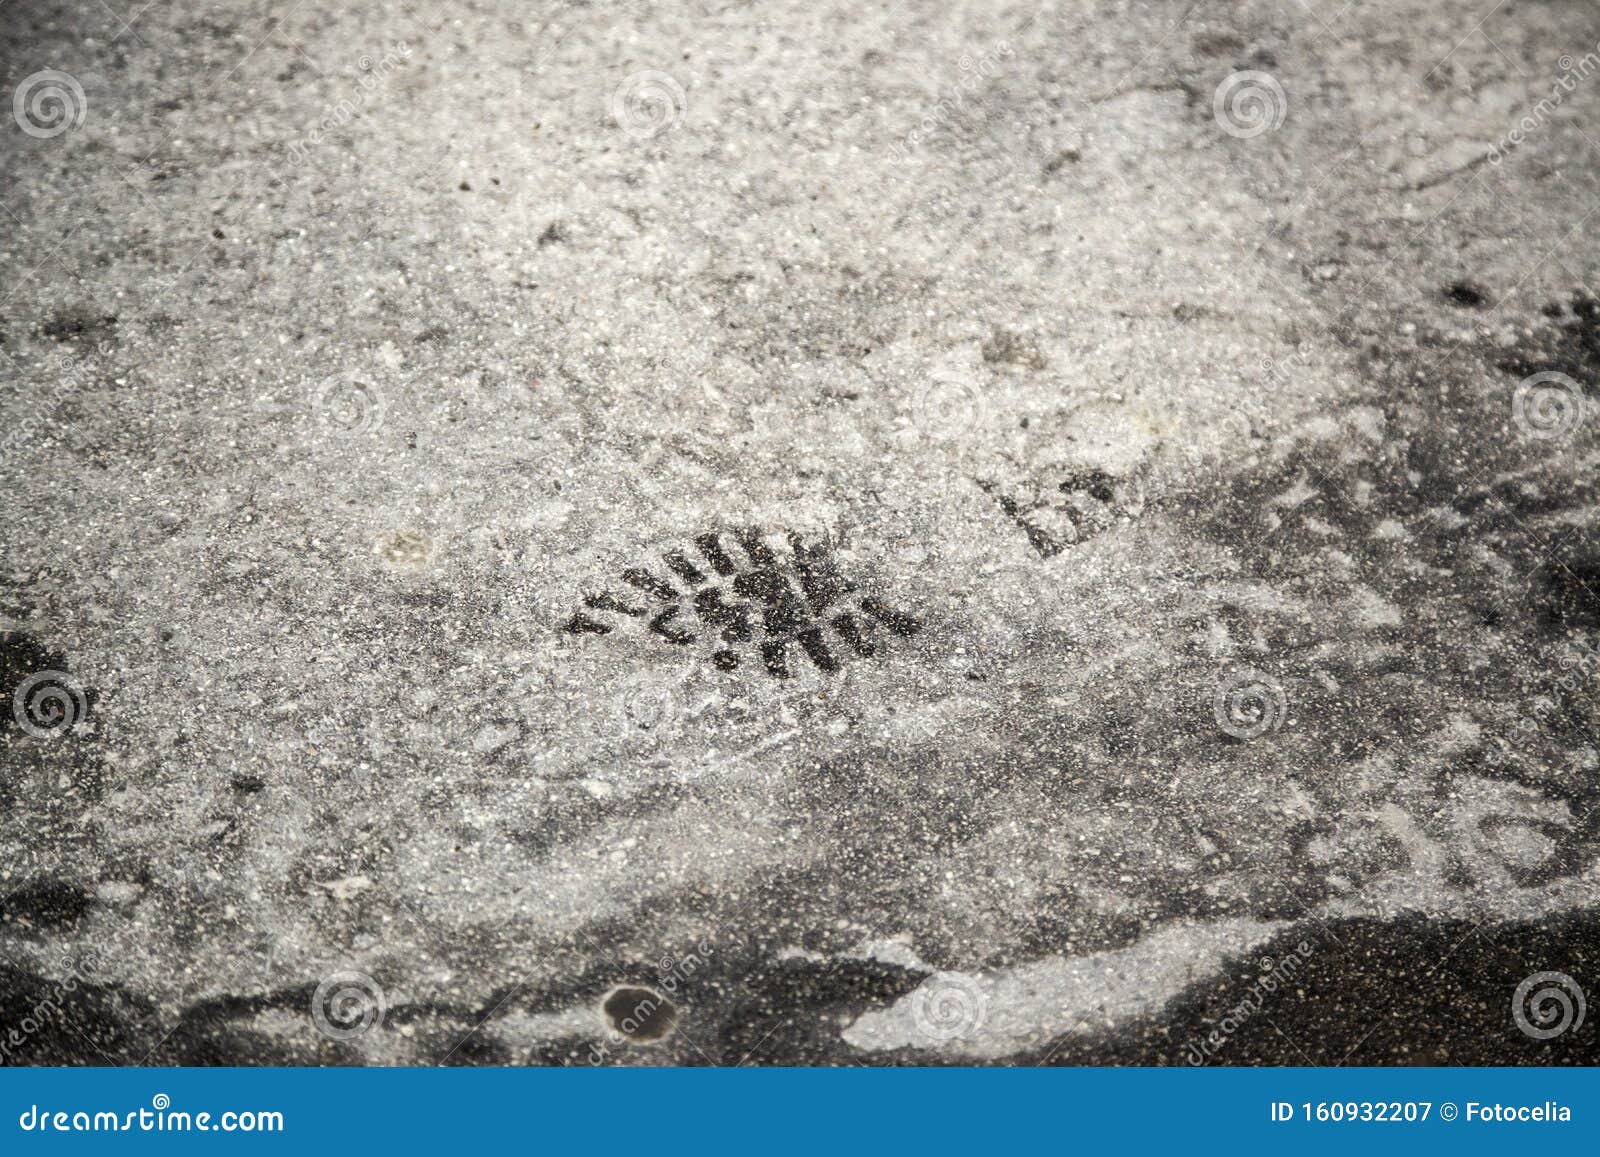 Footprint on wet street